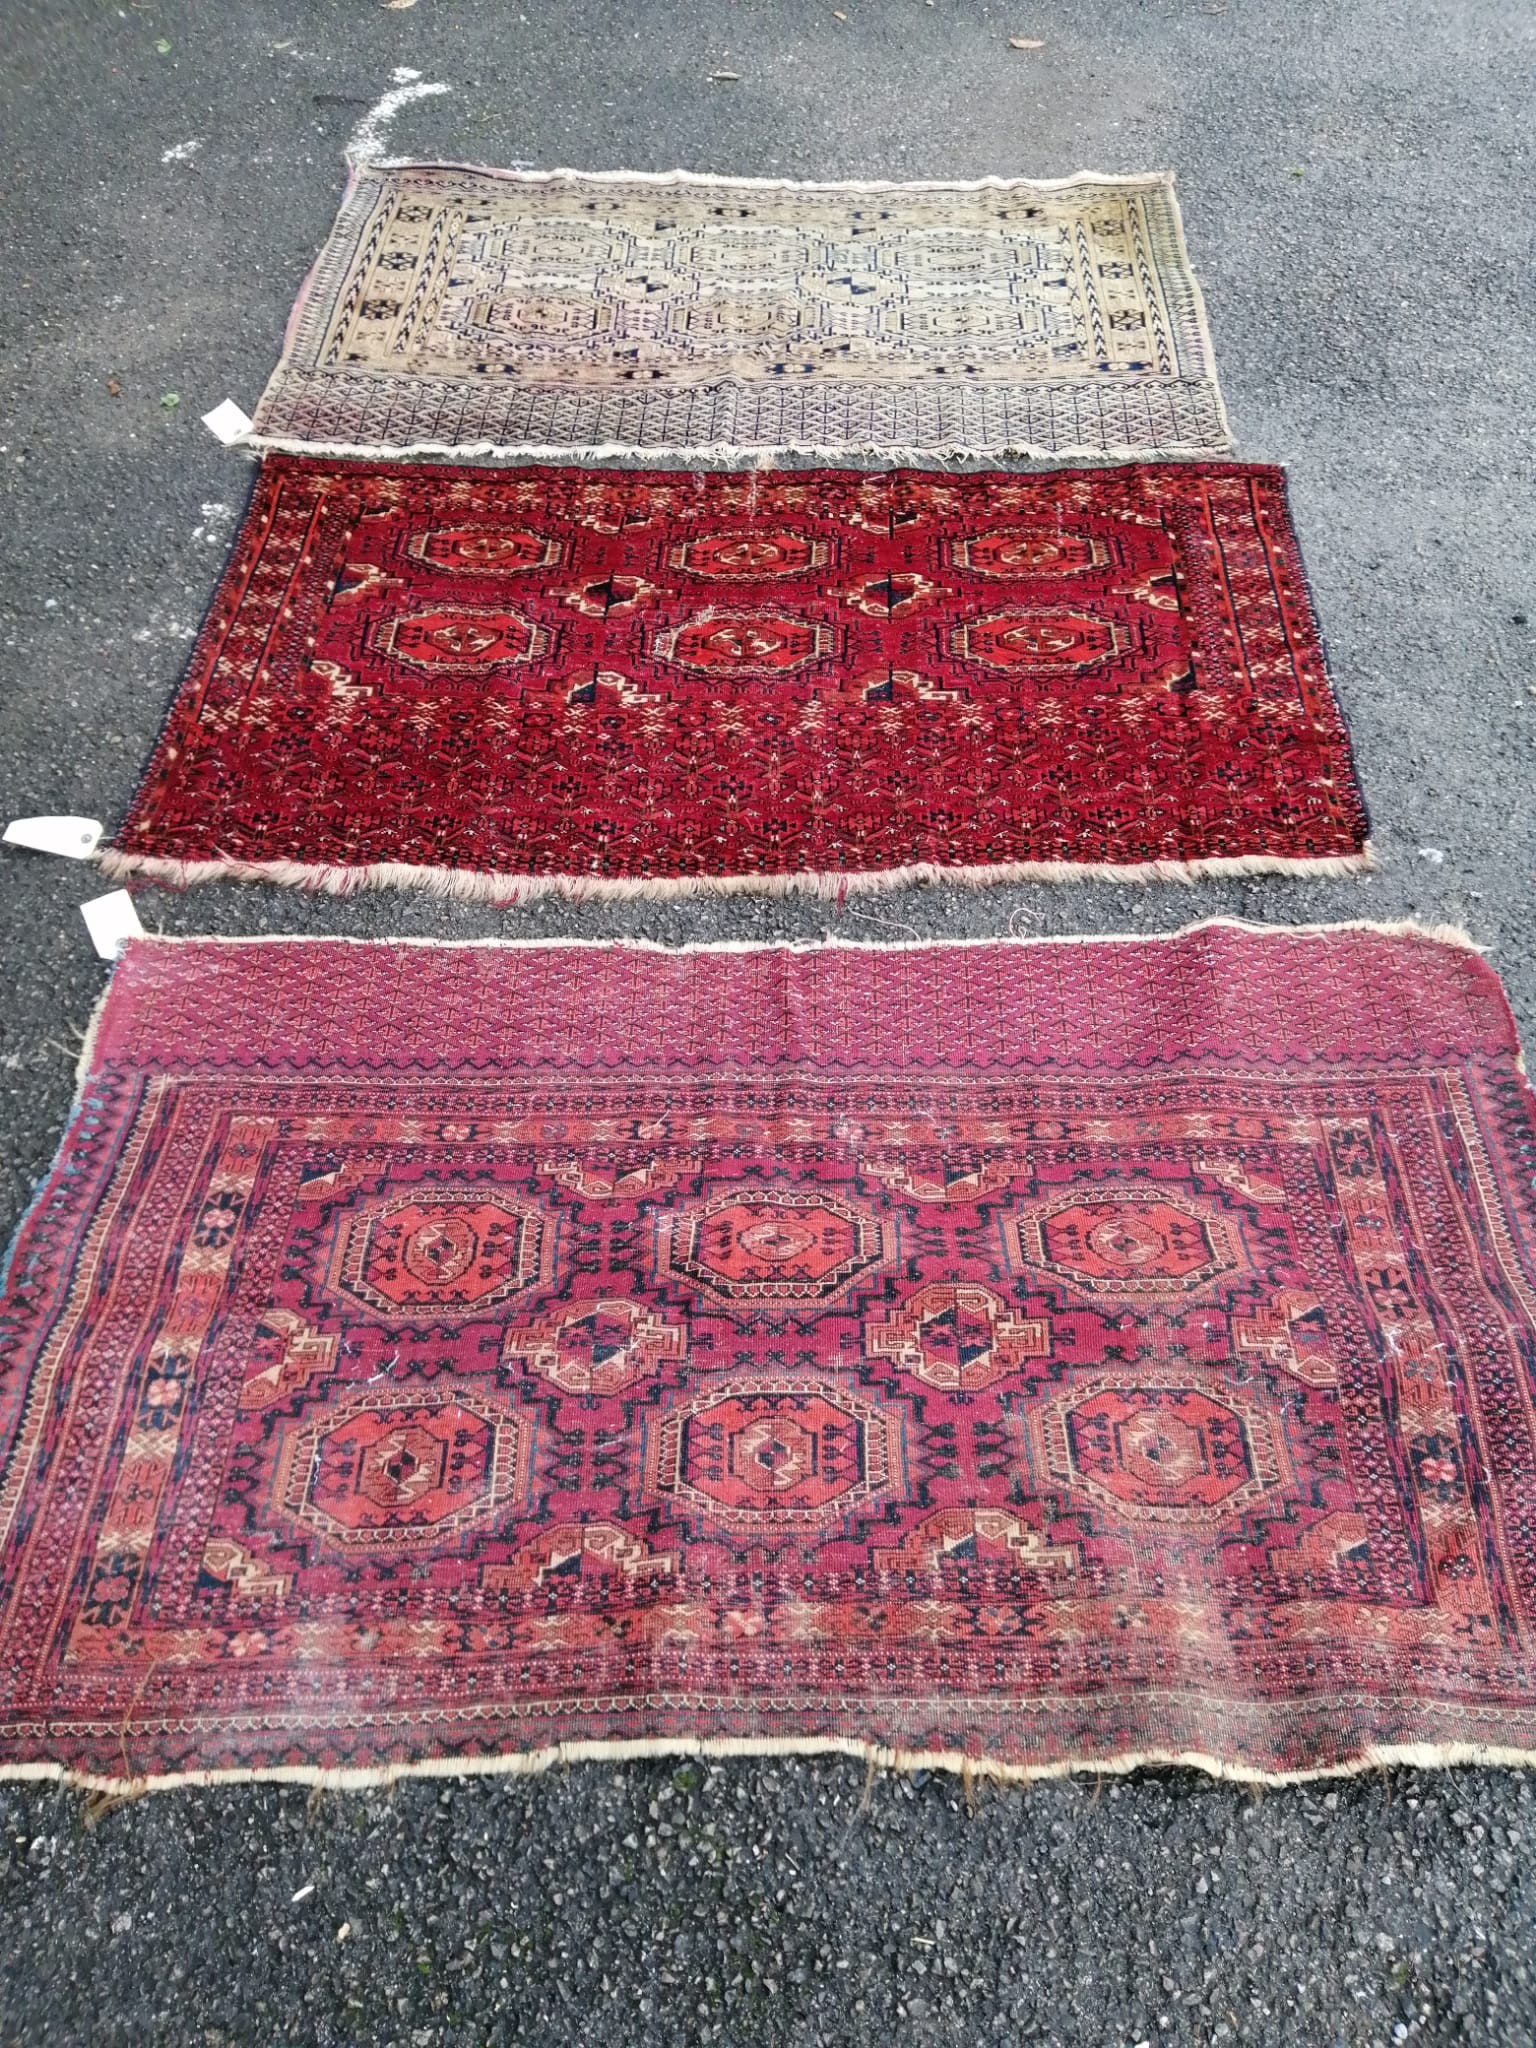 Three antique Salor mats, largest 140 x 82cm                                                                                                                                                                                